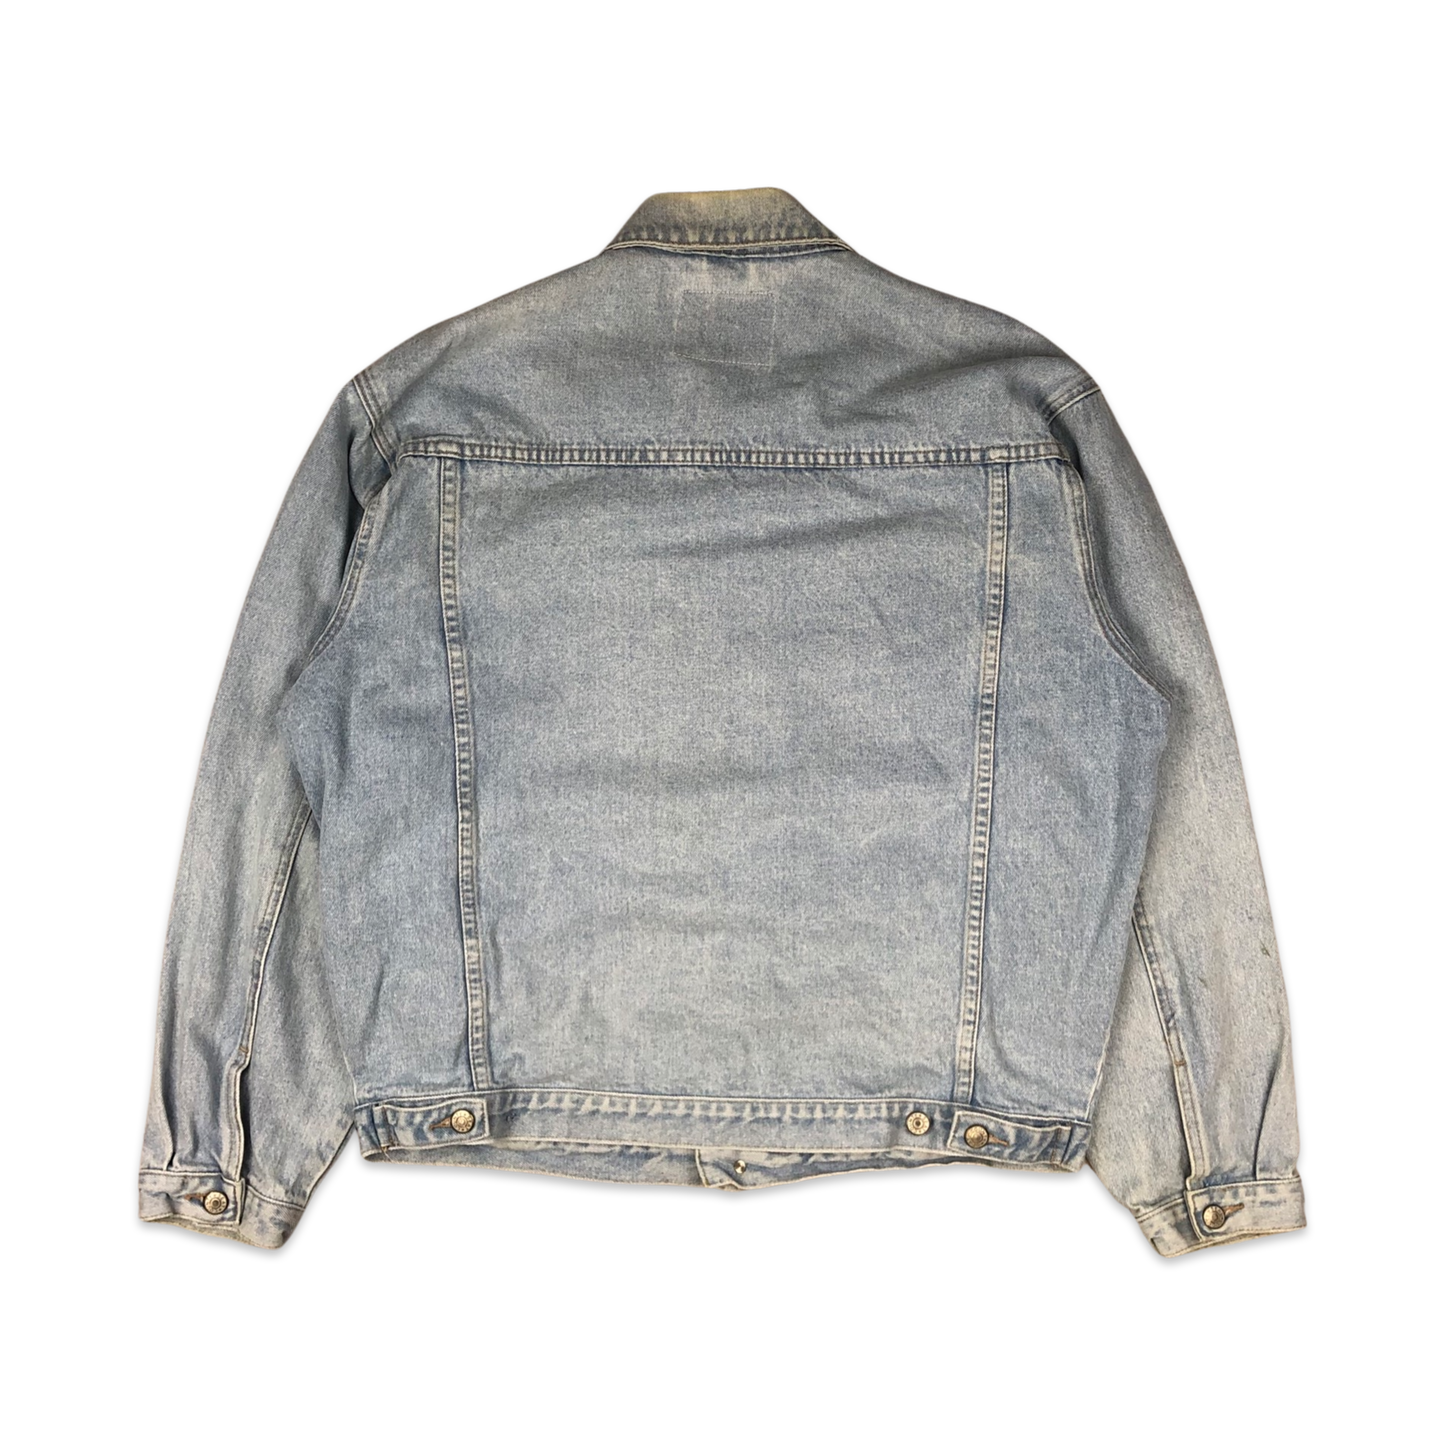 Vintage Light Wash Blue Denim Jacket XXL